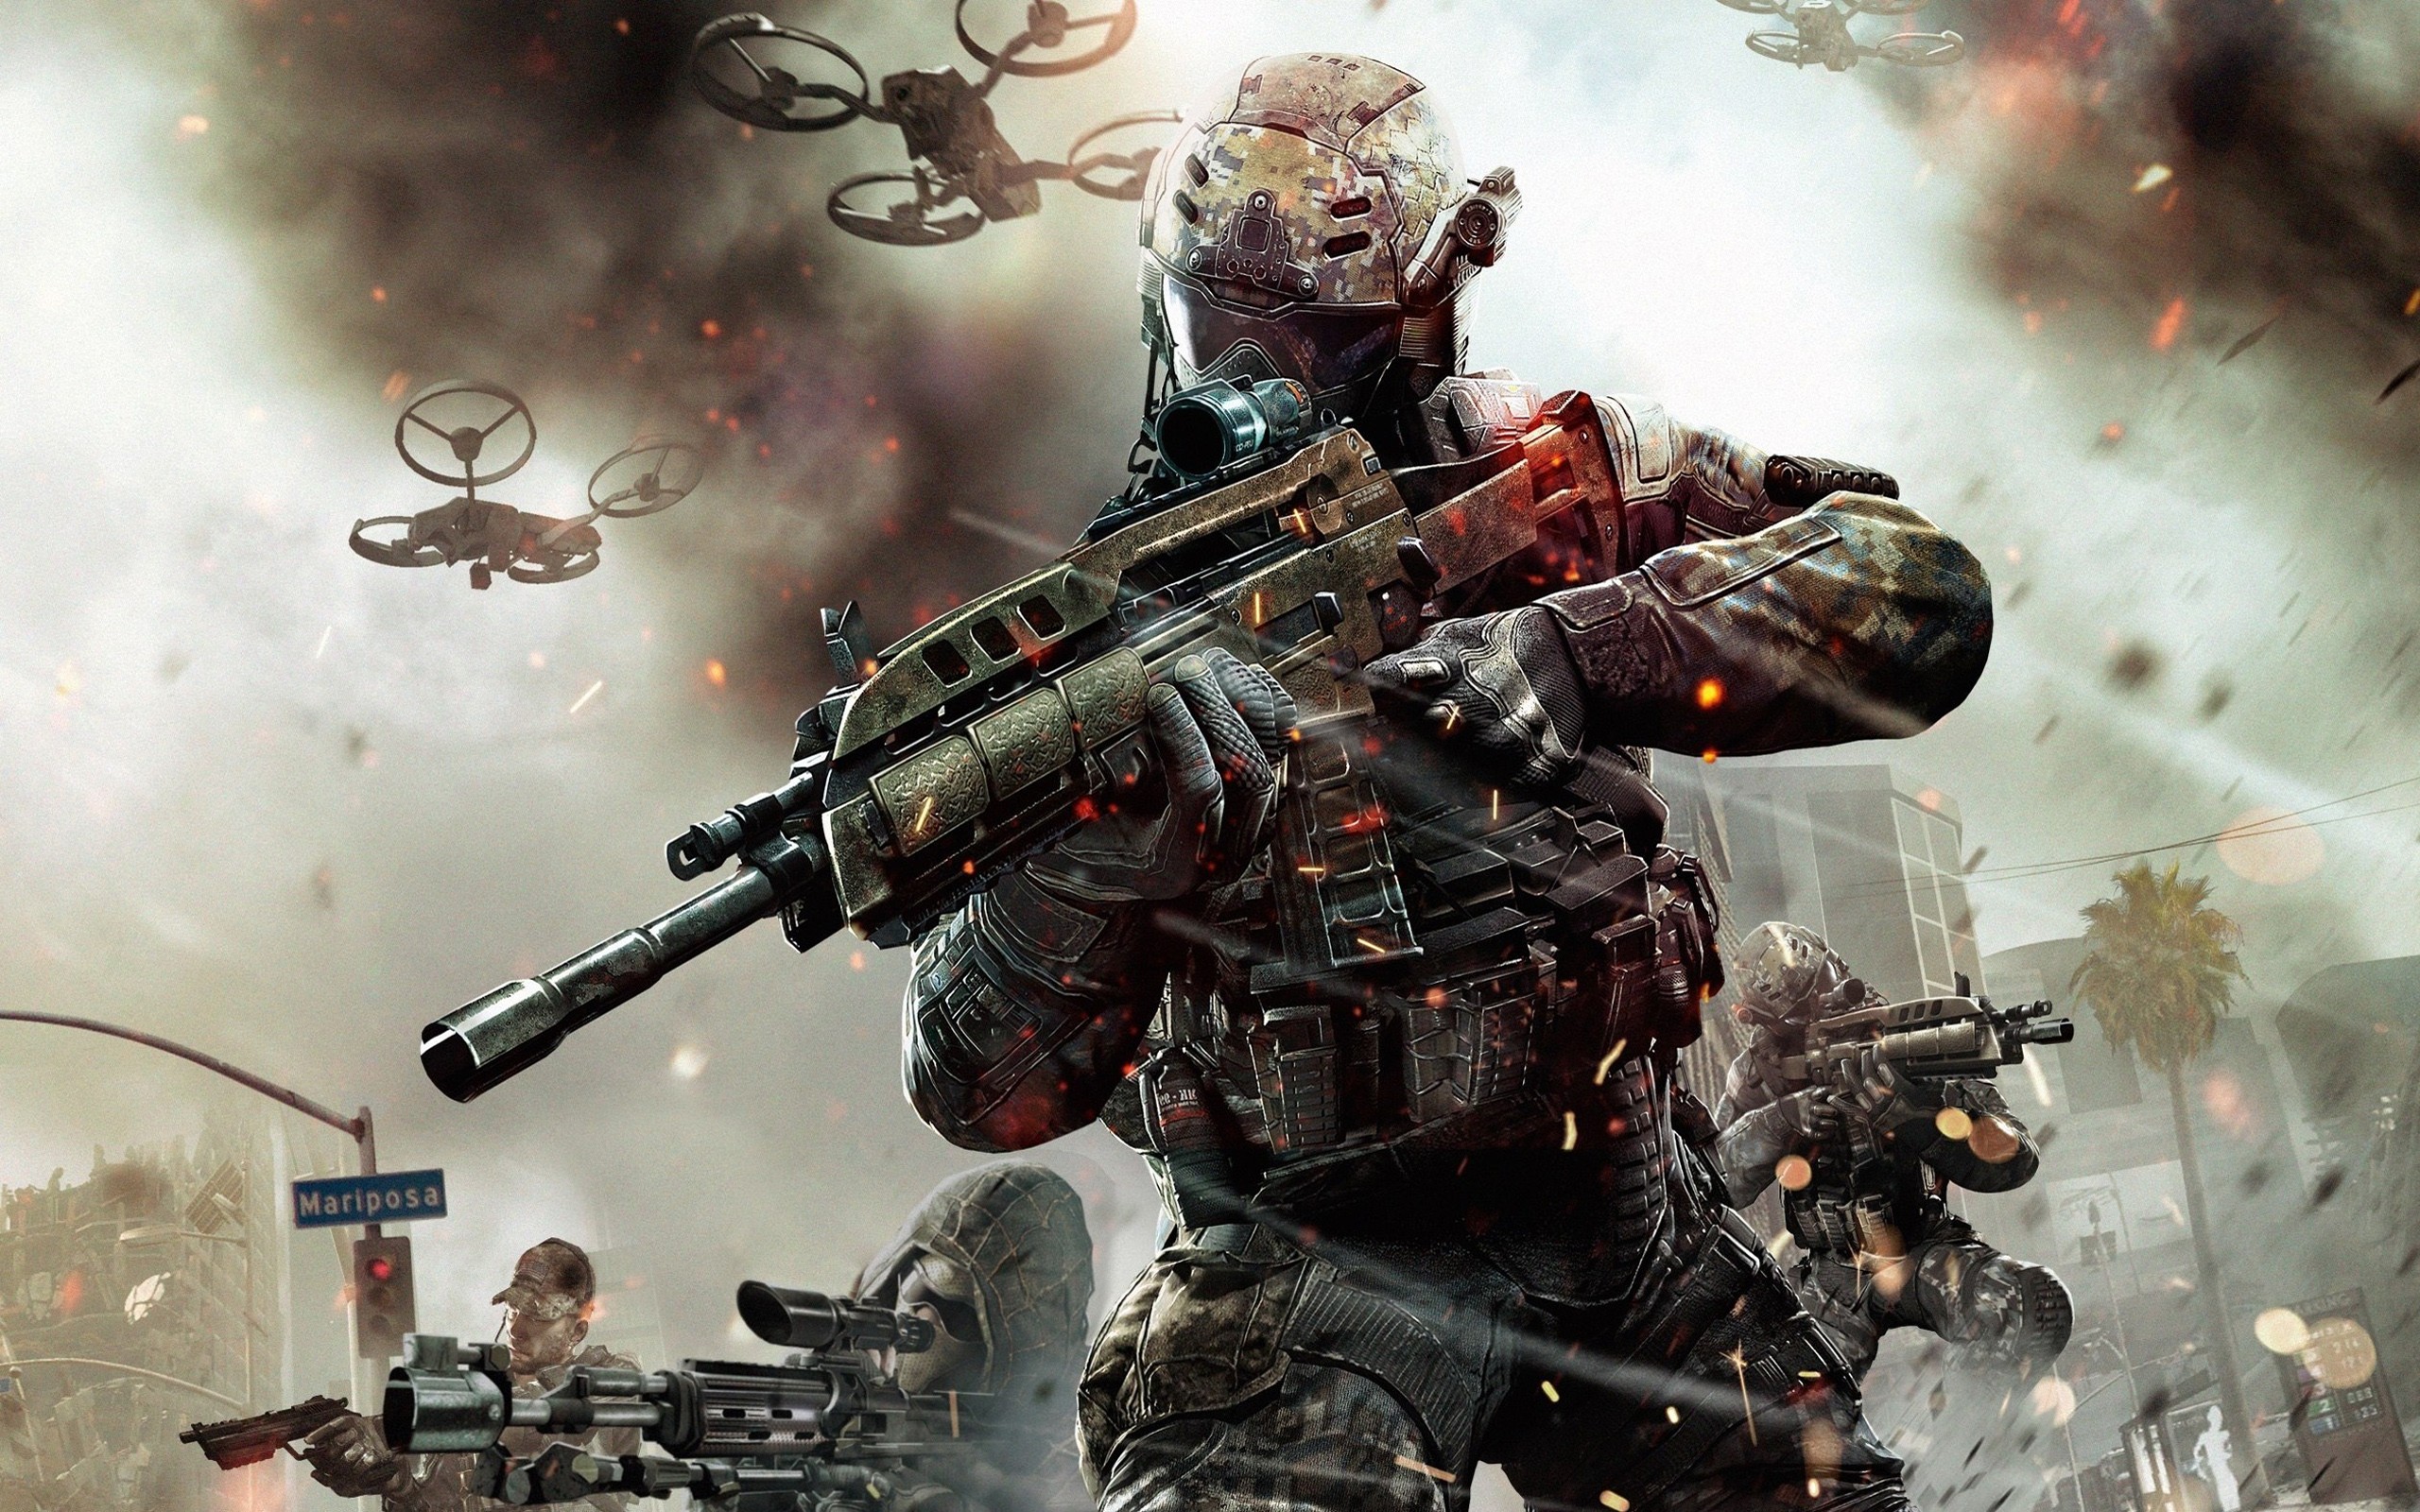 General 2560x1600 Call of Duty: Black Ops II video games Call of Duty video game art PC gaming soldier weapon machine gun battle rifles